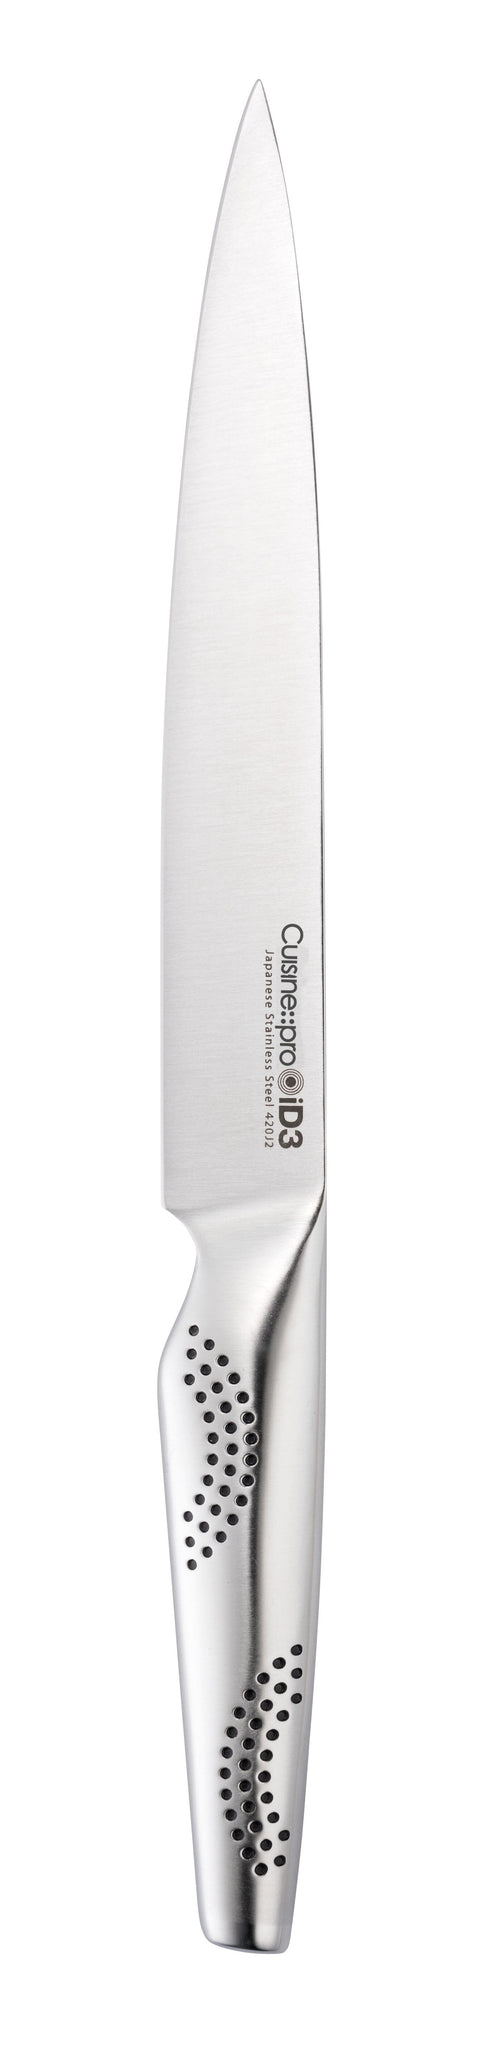 Cuisine::pro ID3 Carving Knife Set